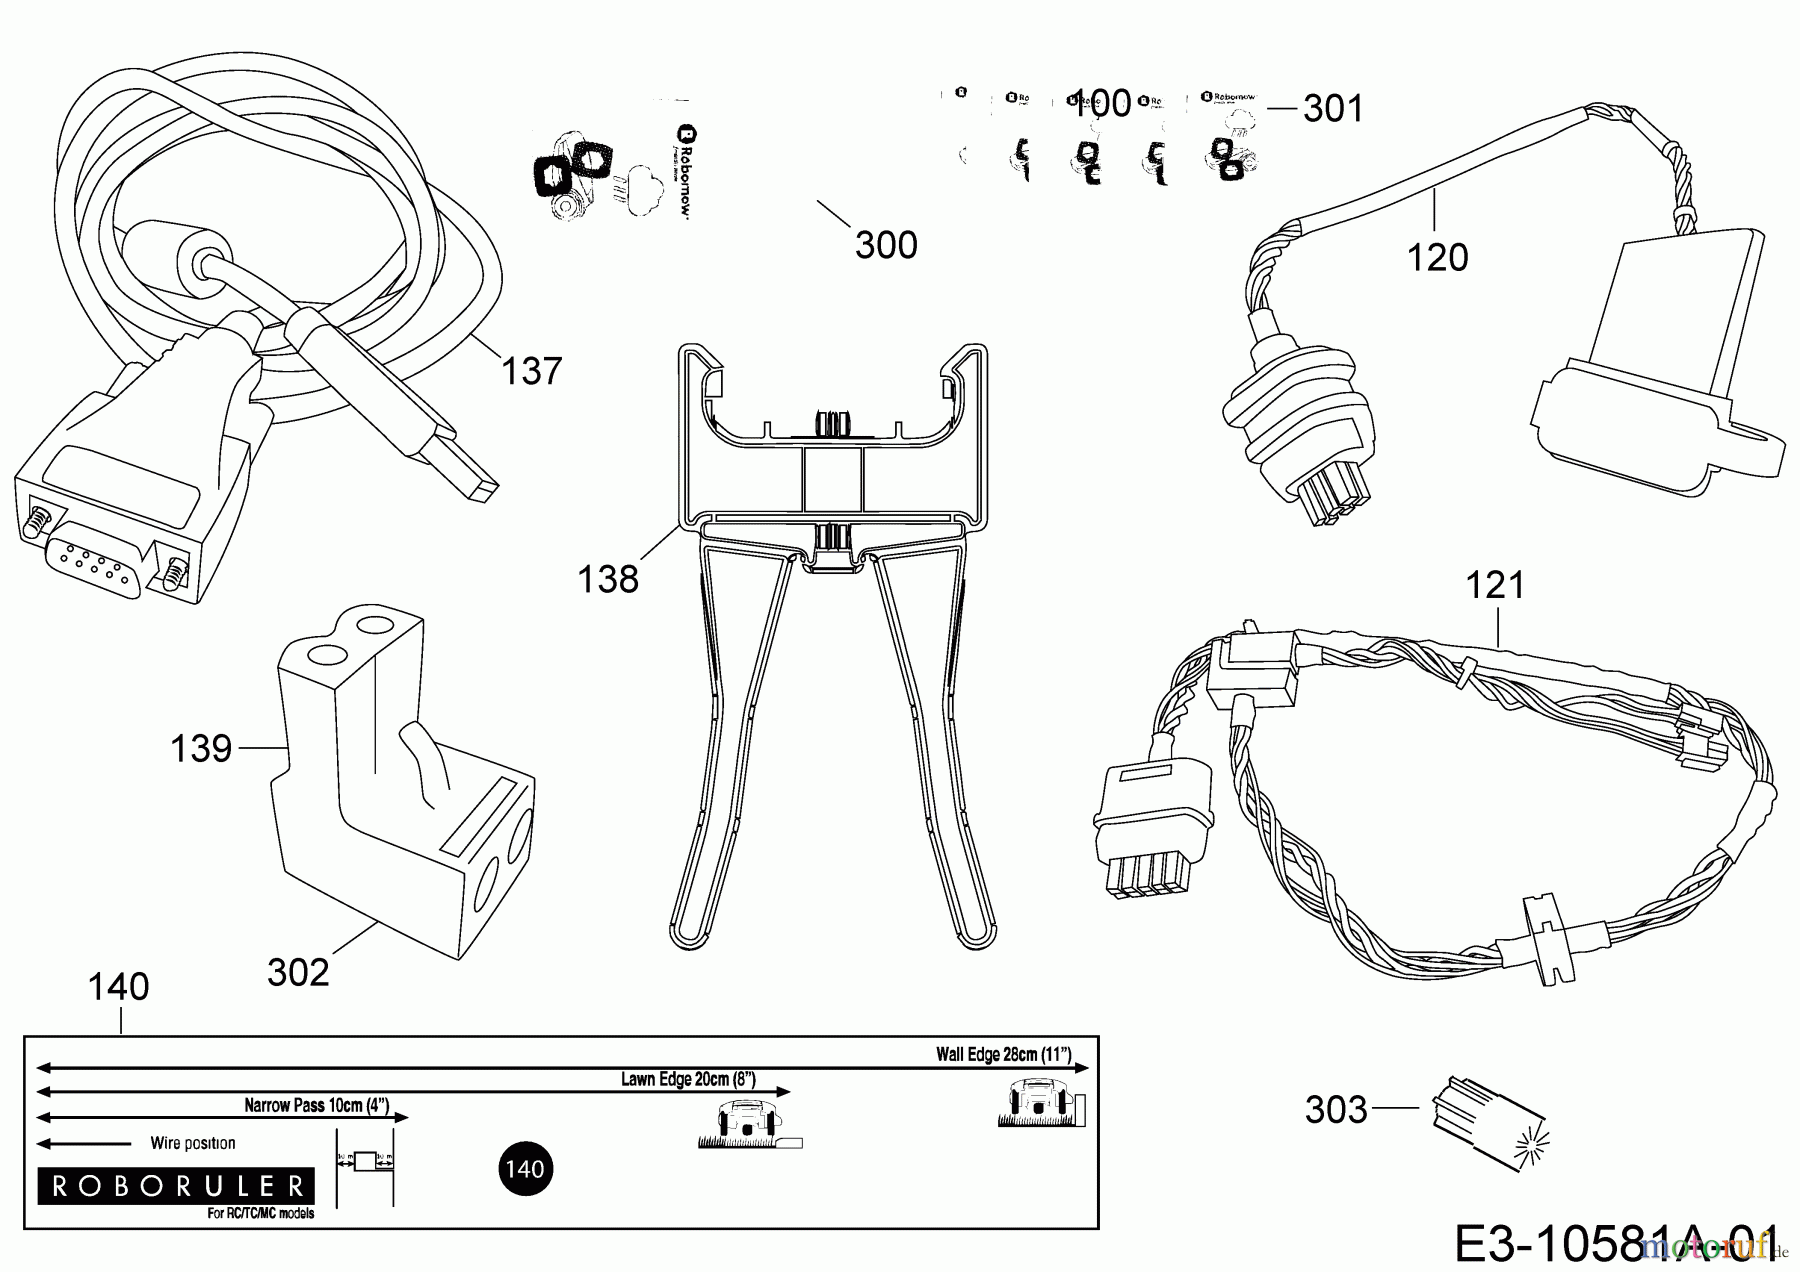  Robomow Mähroboter MC300 (Black) PRD7004P1  (2015) Kabel, Kabelanschluß, Regensensor, Werkzeug